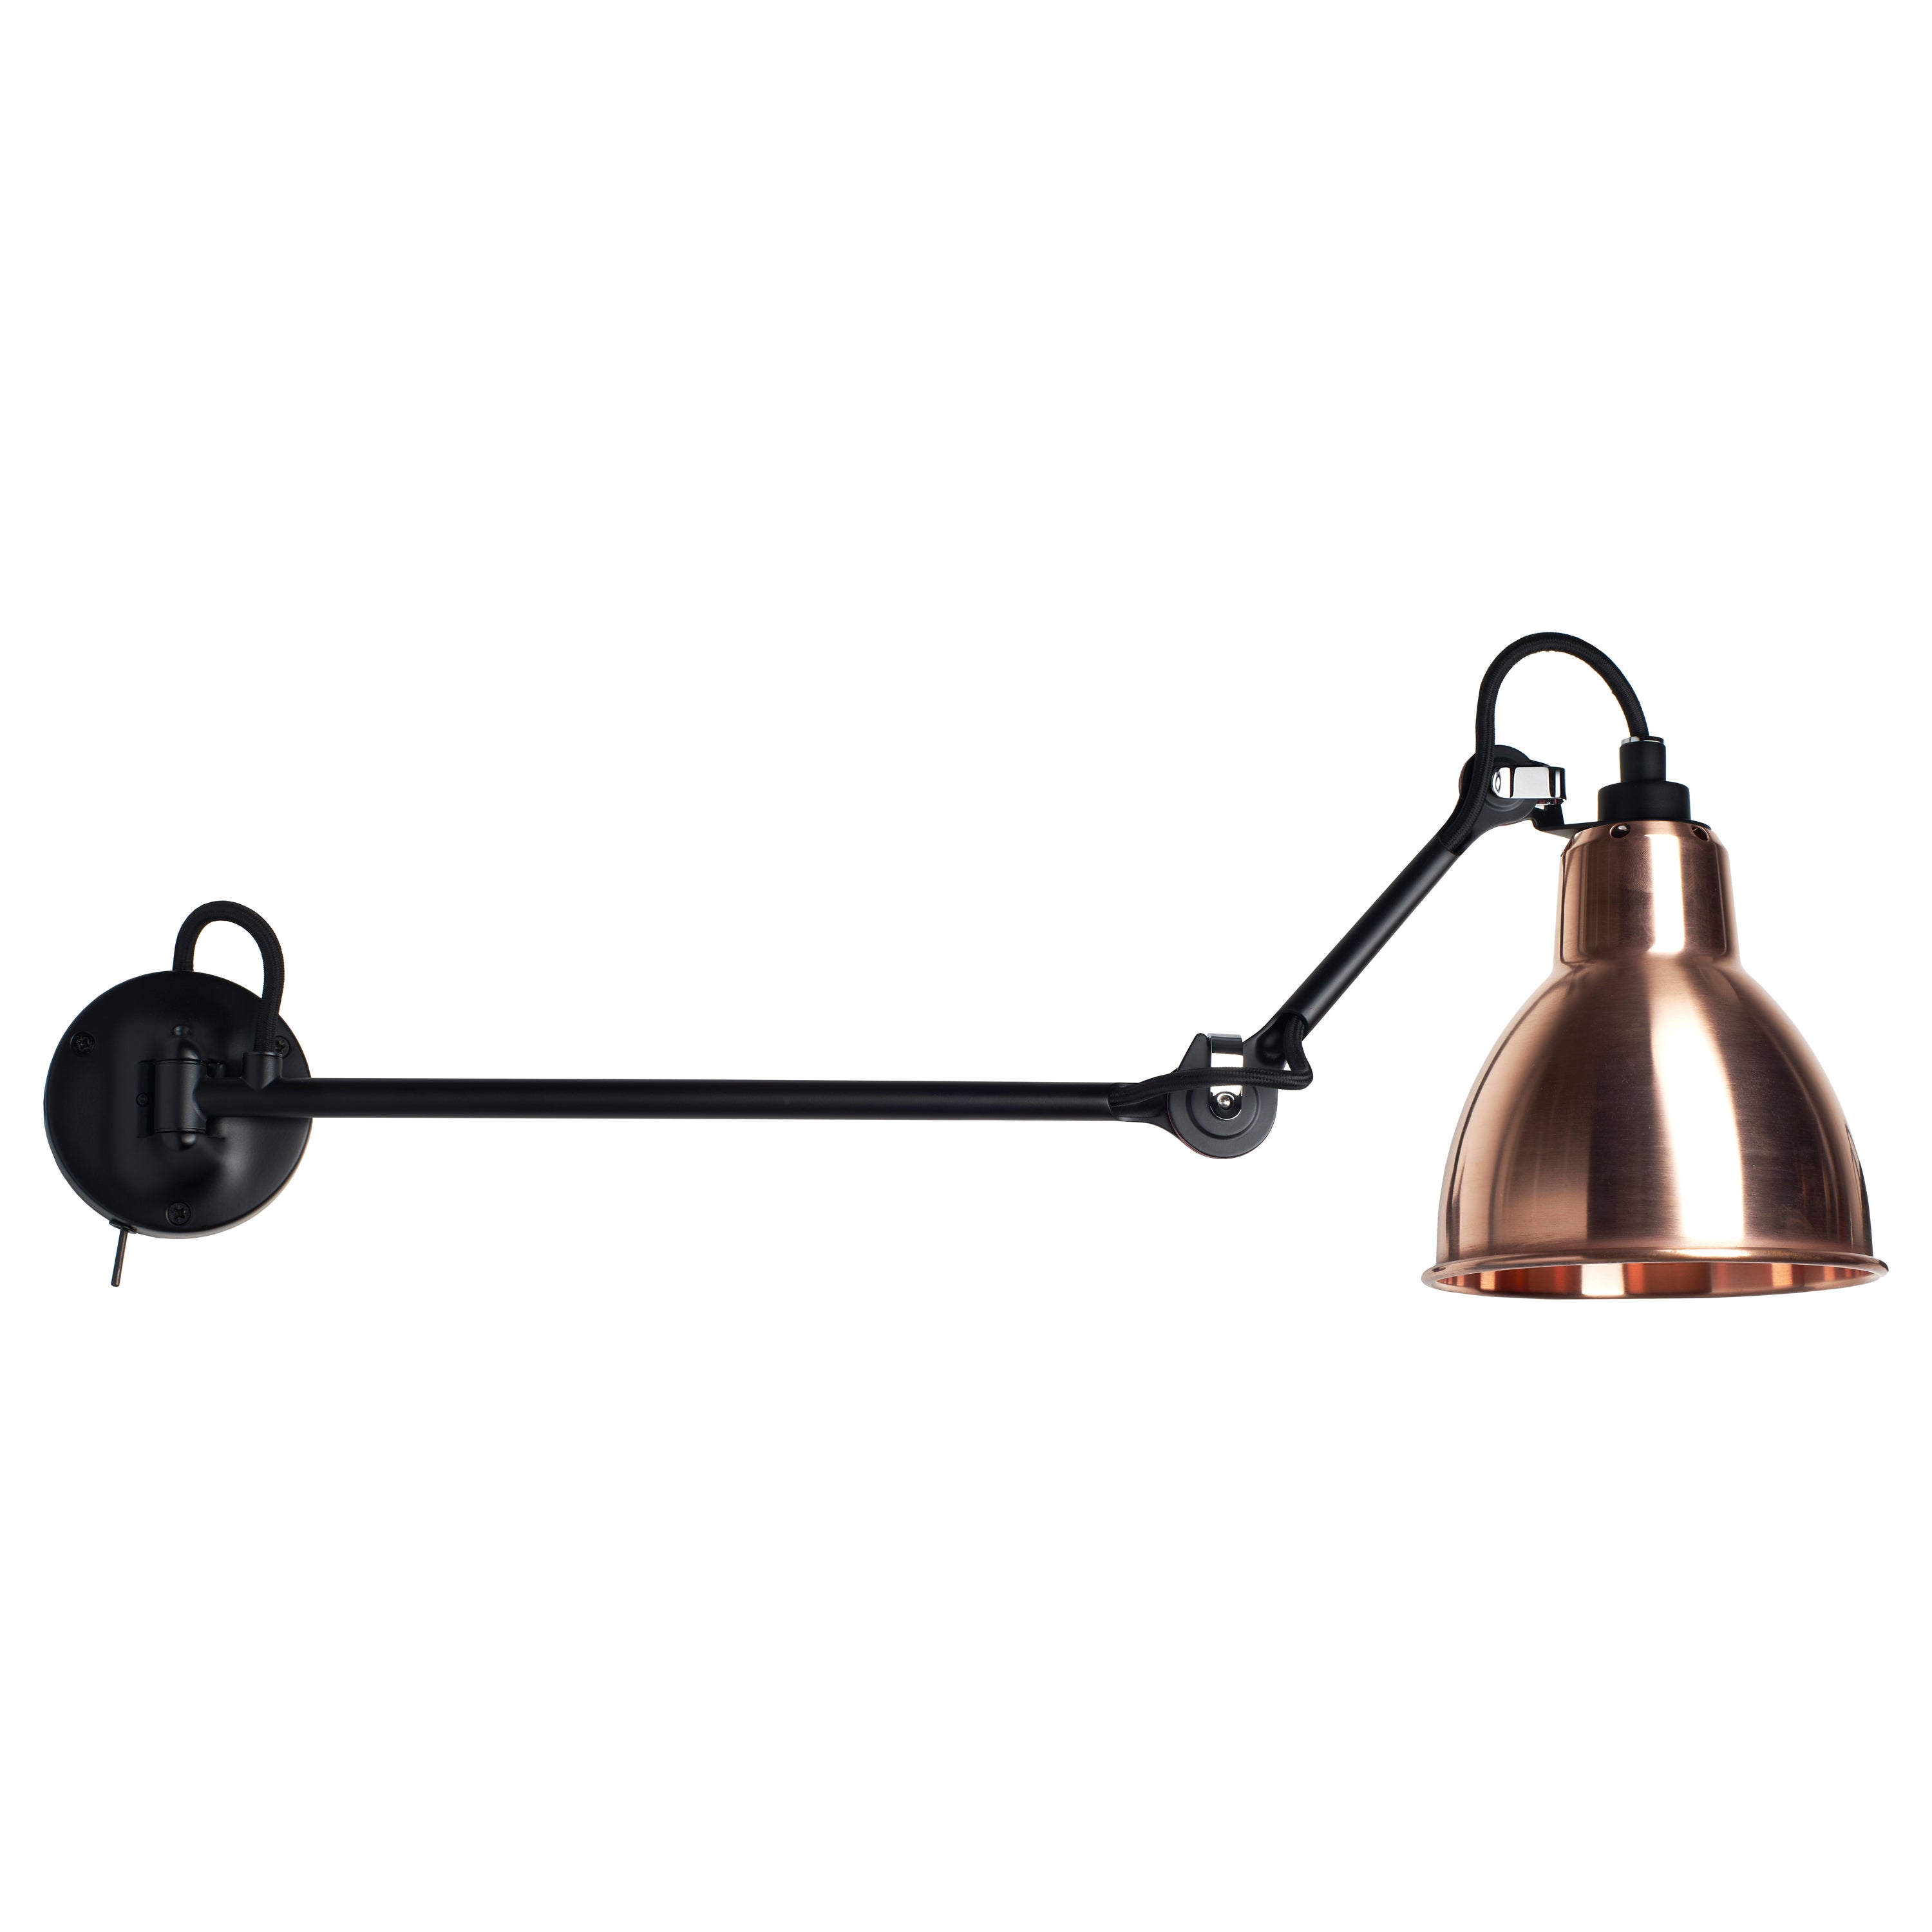 DCW Editions La Lampe Gras N°204 L40 SW Wall Lamp in Black Arm &Raw Copper Shade